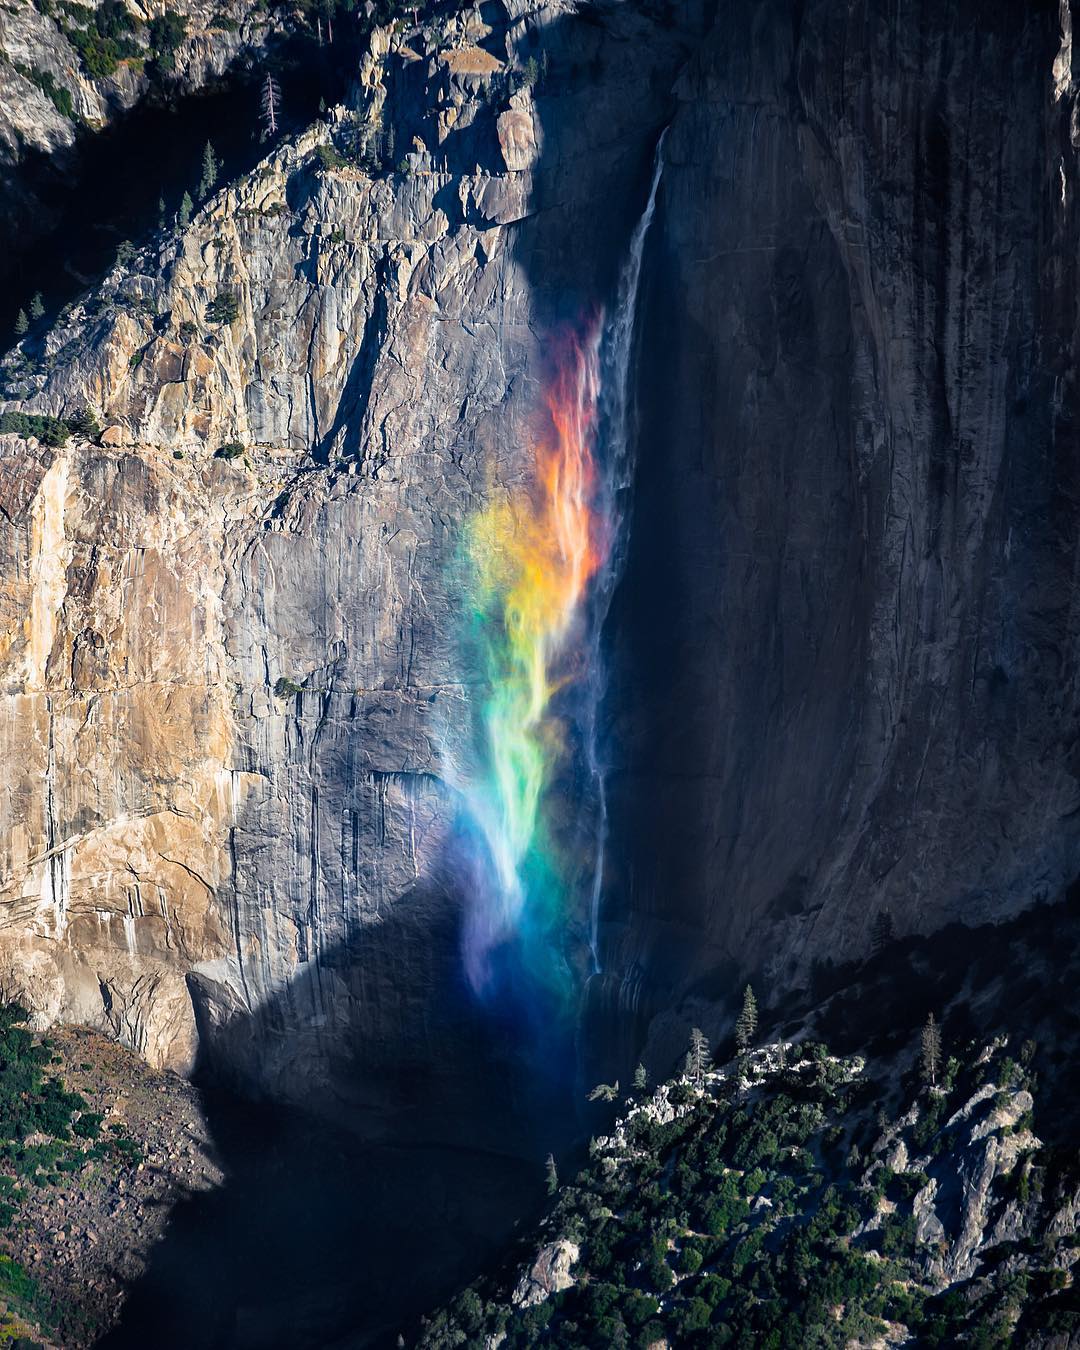 Waterfall splashes created a rainbow.